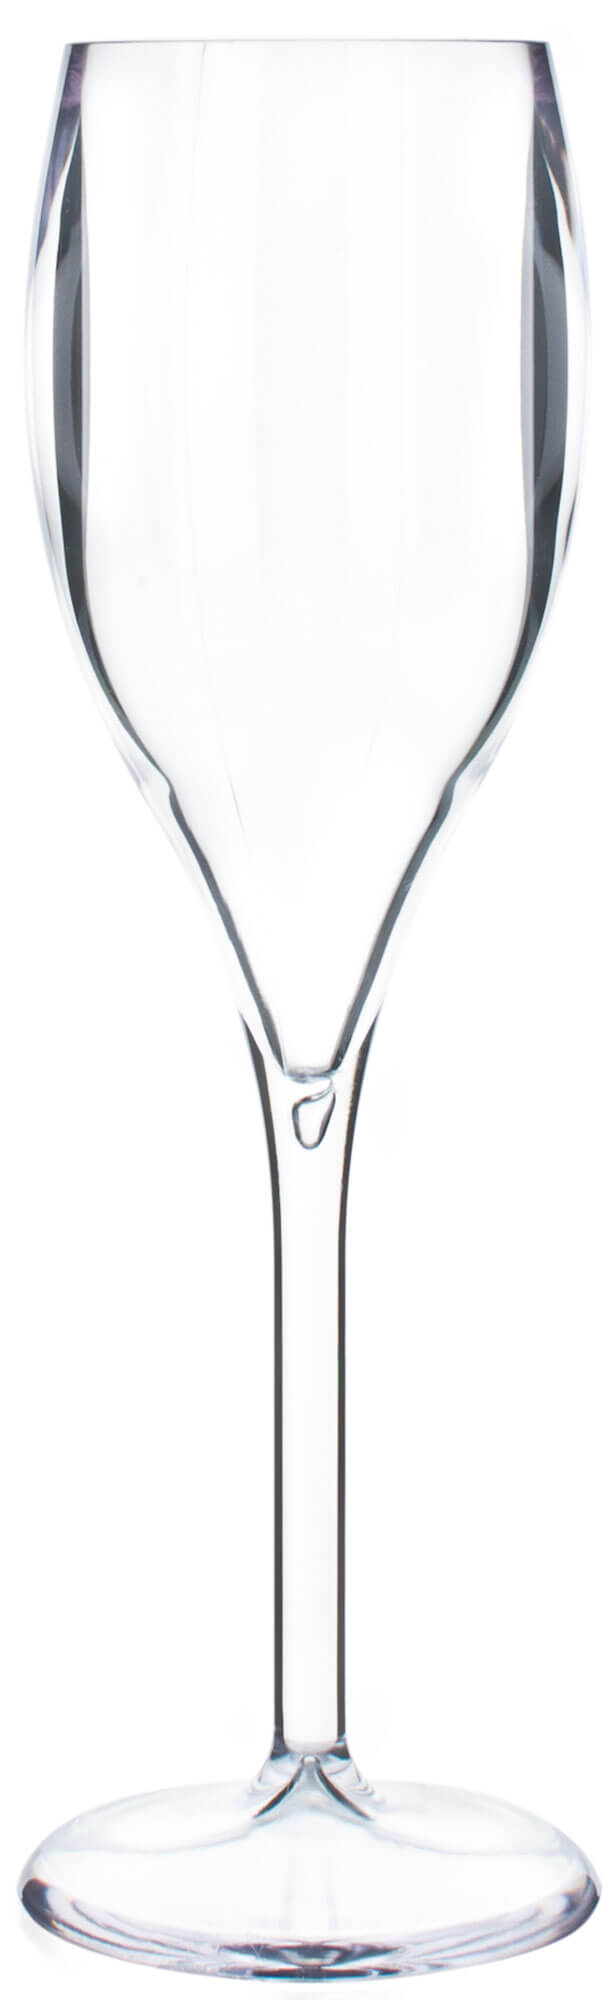 Champagnerglas Opale, Kunststoff SAN - 150ml (1 Stk.)